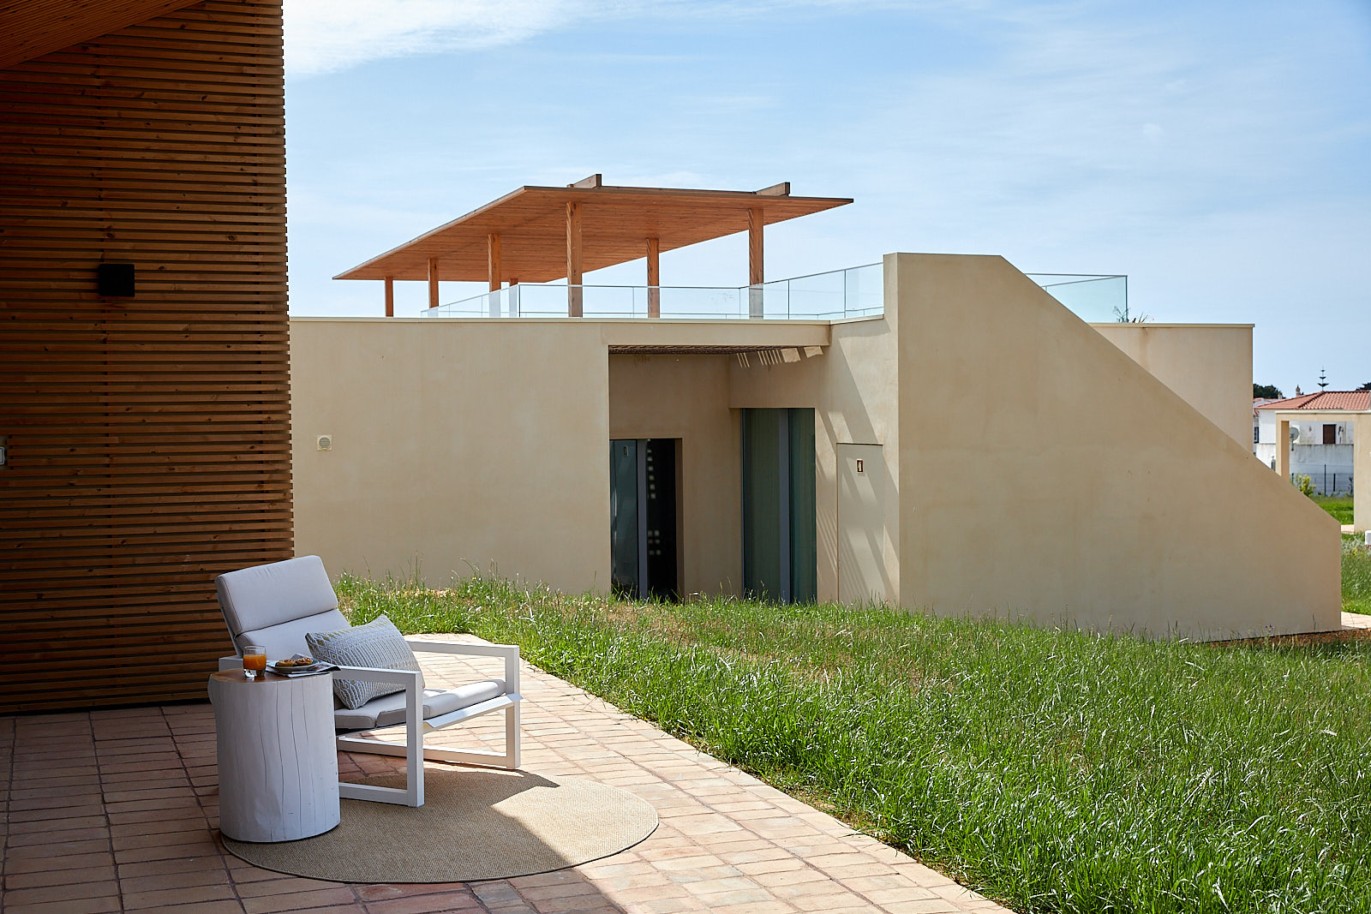 2 bedroom apartment in resort, for sale in Porches, Algarve_228784